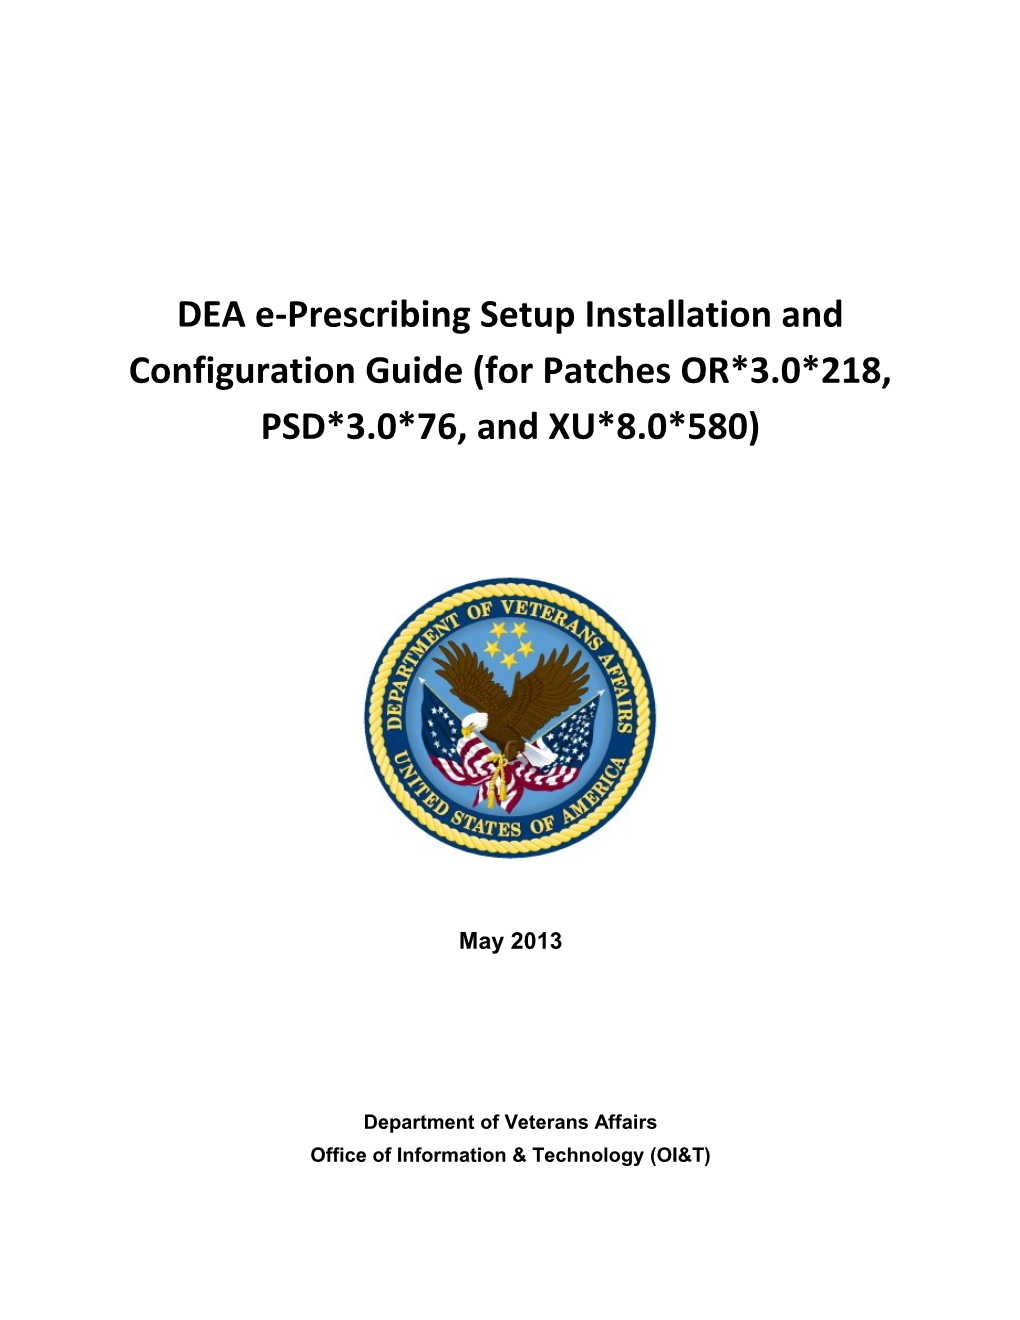 DEA E-Prescribing Setup Installation and Configuration Guide for Patches (OR*3.0*218, PSD*3*76